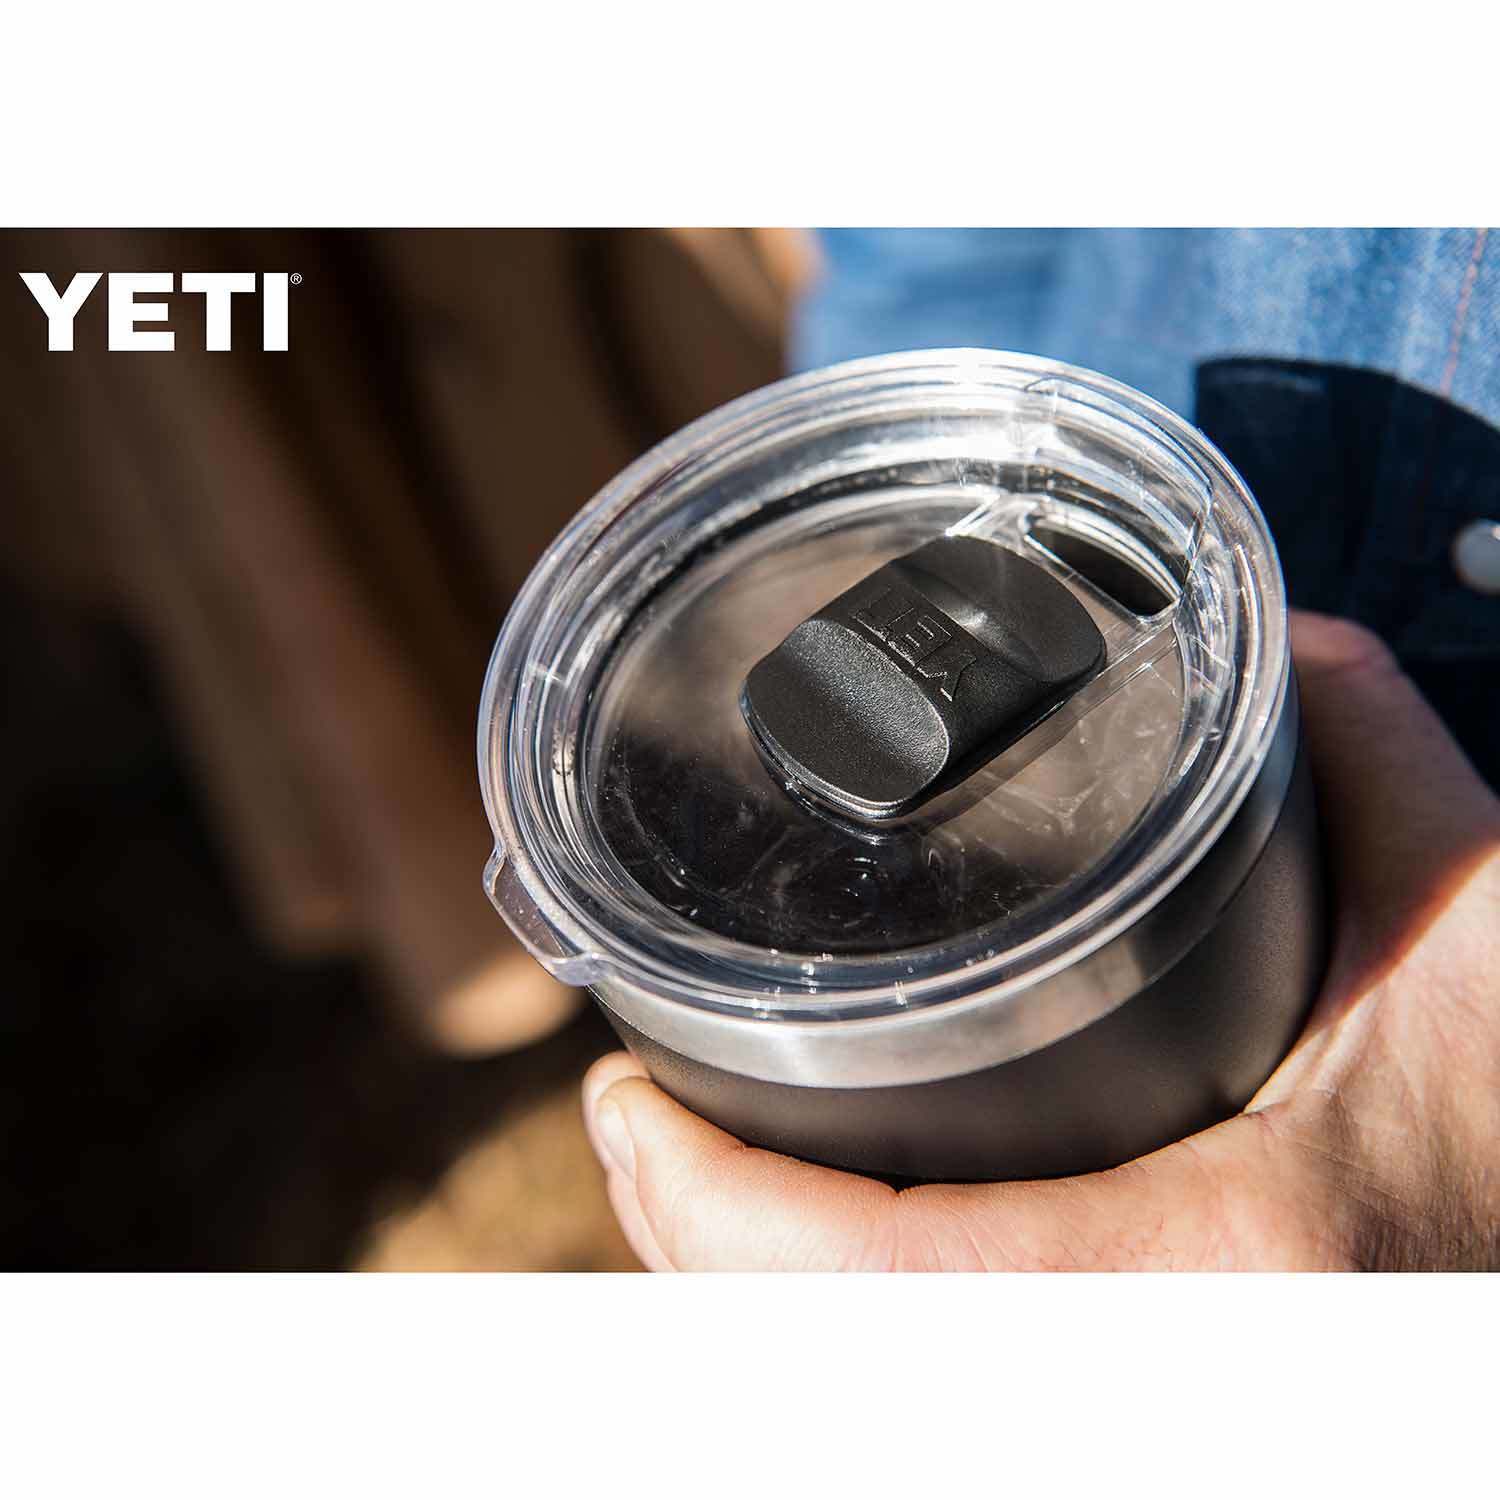 Yeti Rambler 30oz Travel Mug w/MagSlider Lid & with Welded Handle - Charcoal